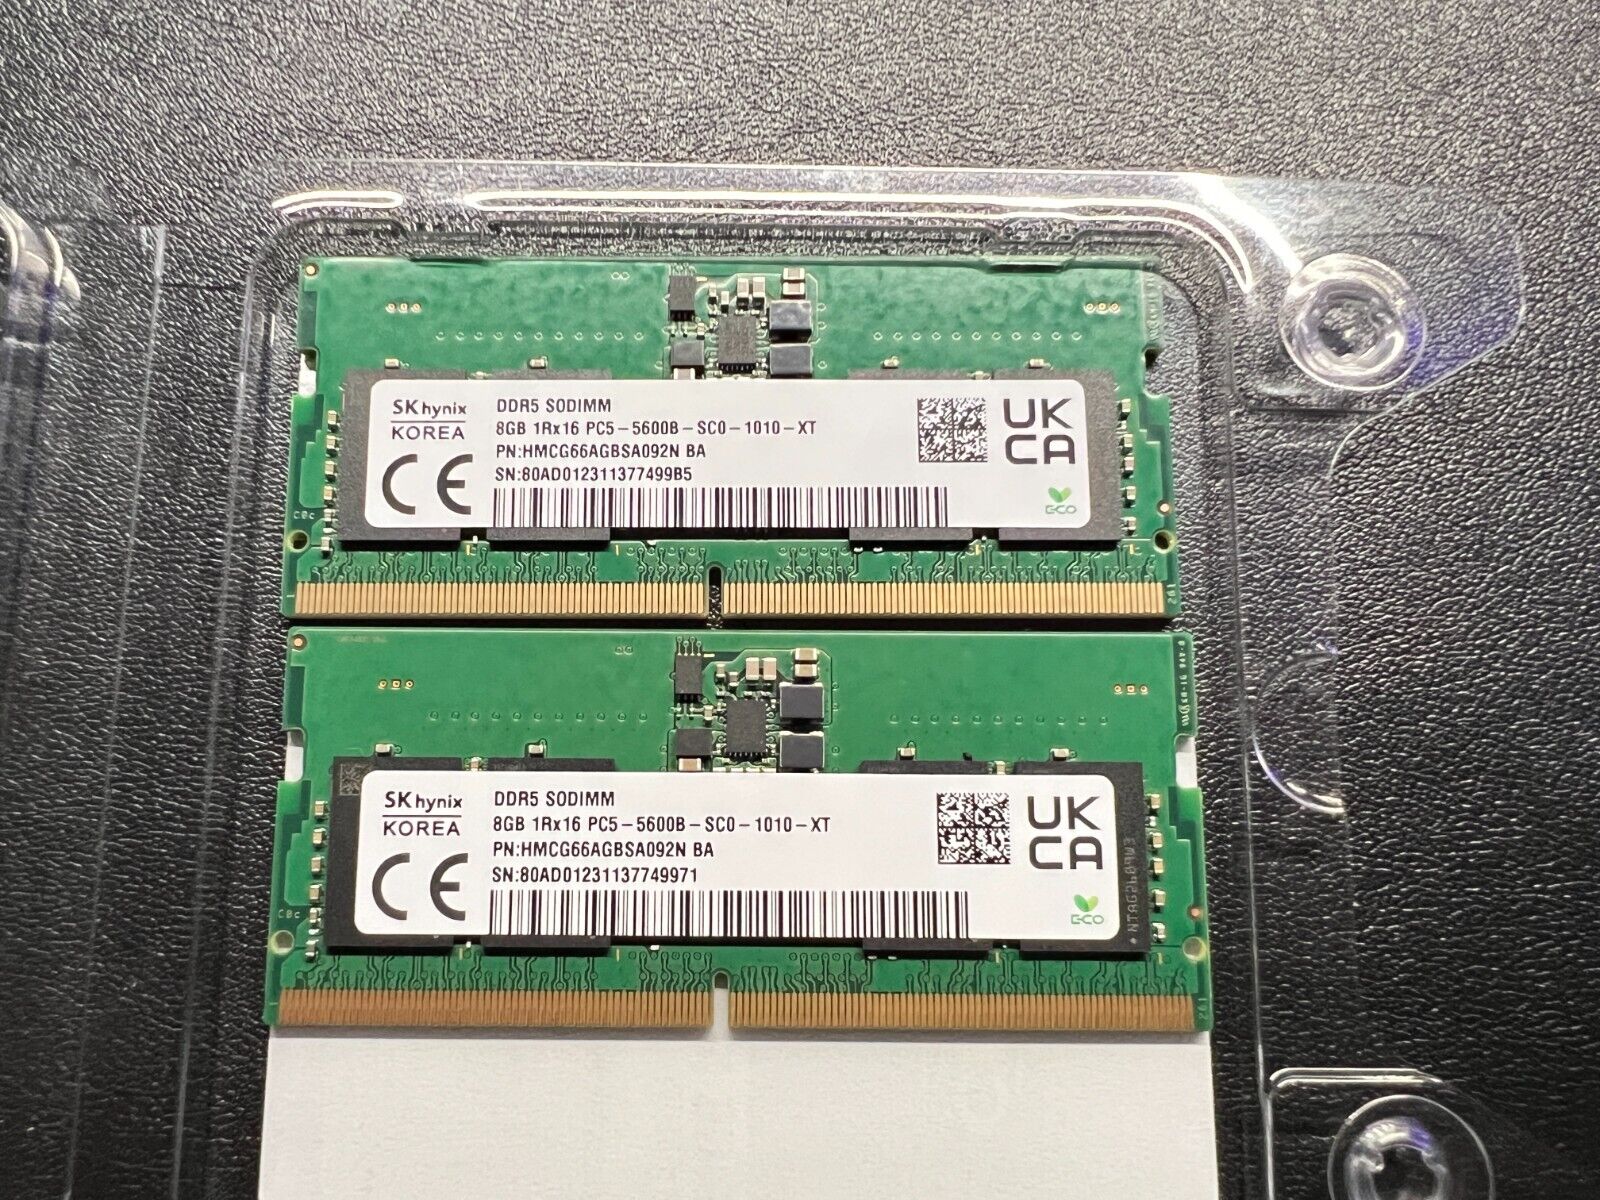 SK Hynix 8GB DDR5 SODIMM 1Rx16 PC5-5600B-SC0-1010-XT Laptop RAM Memory Set of 2